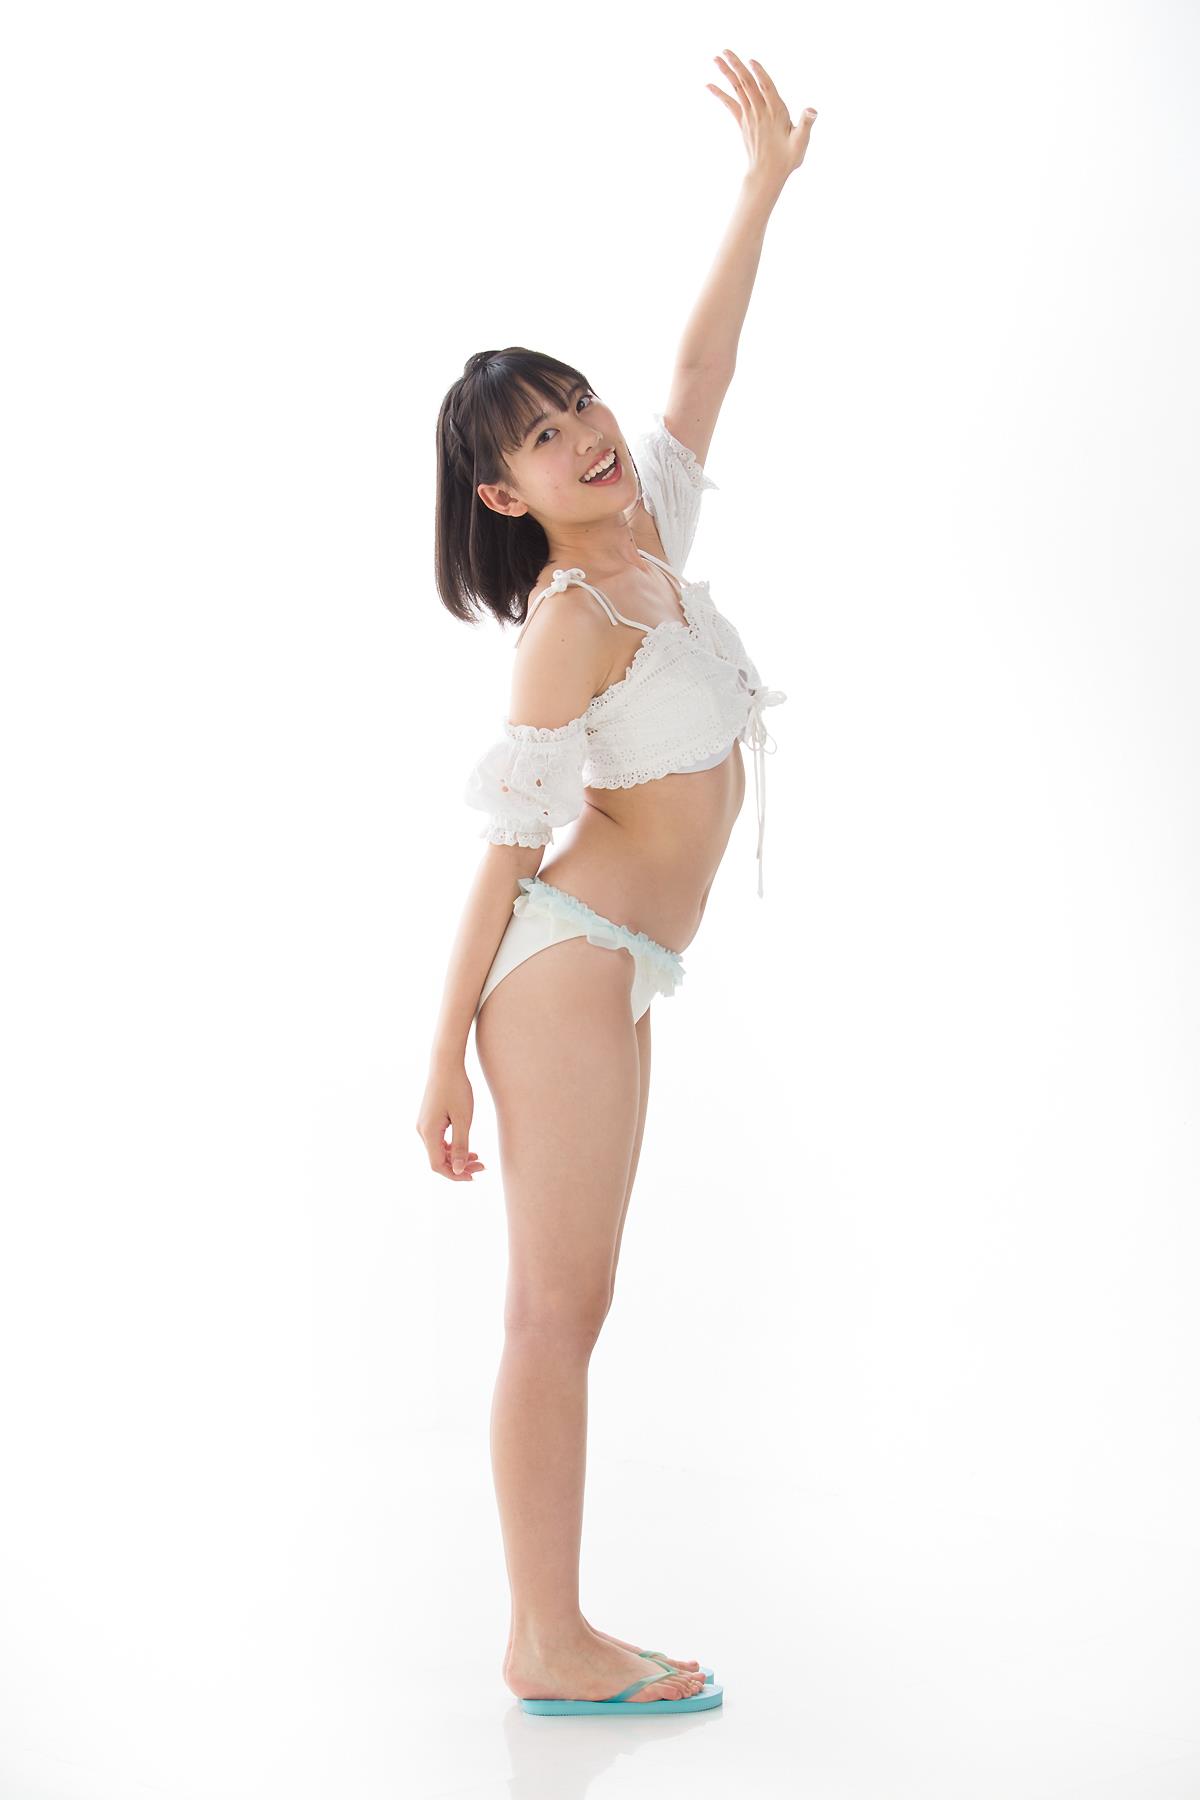 Minisuka.tv Sarina Kashiwagi 柏木さりな Premium Gallery 2.6 - 17.jpg